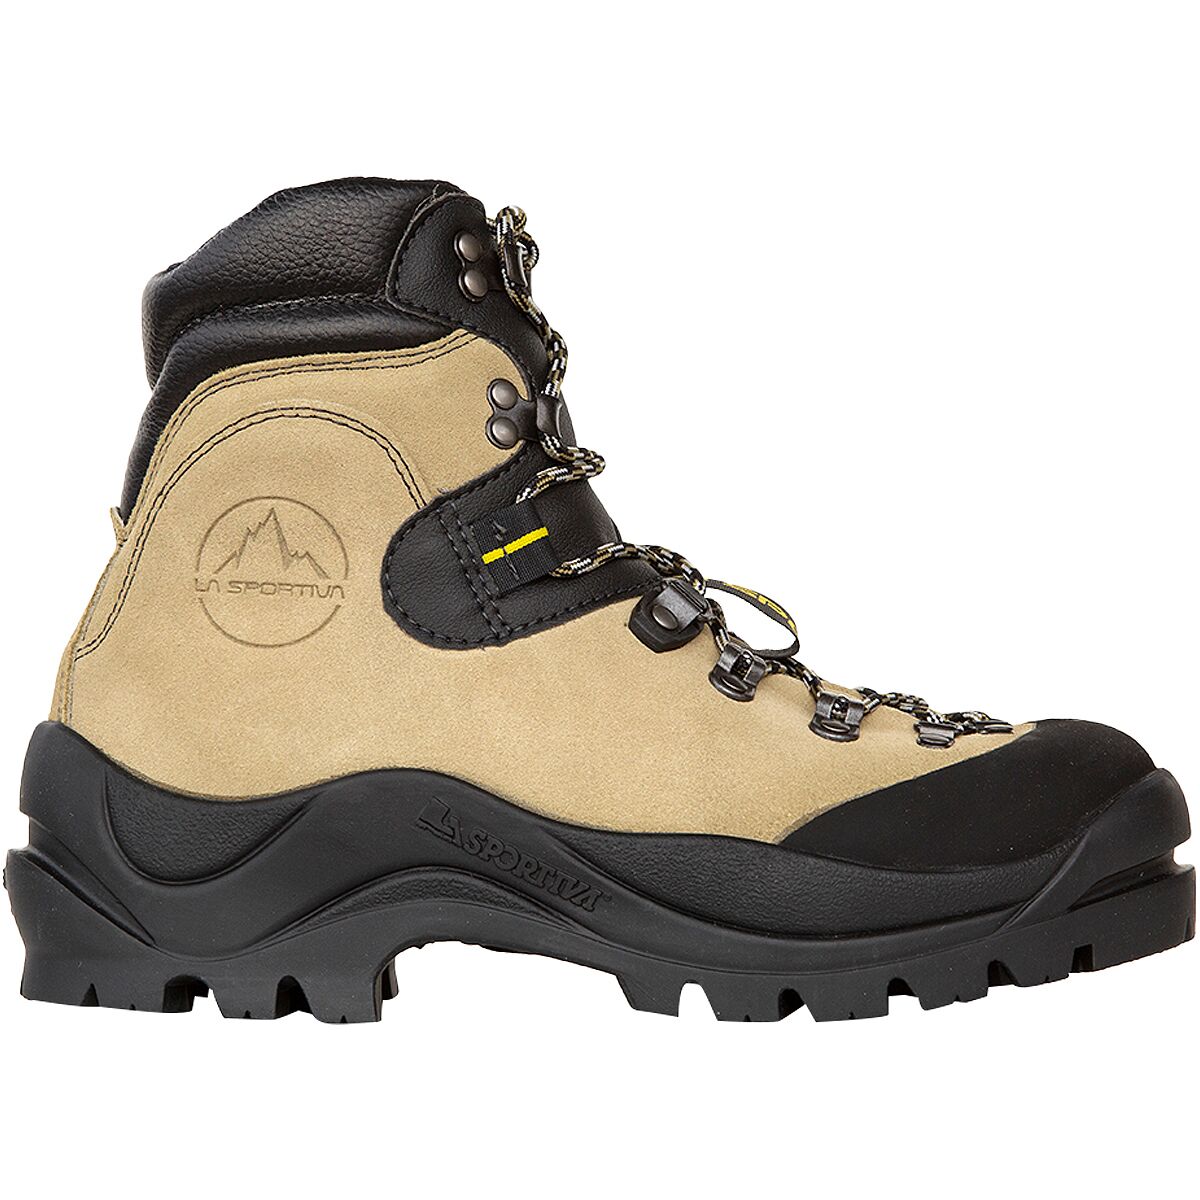 Makalu Mountaineering Boot - Men